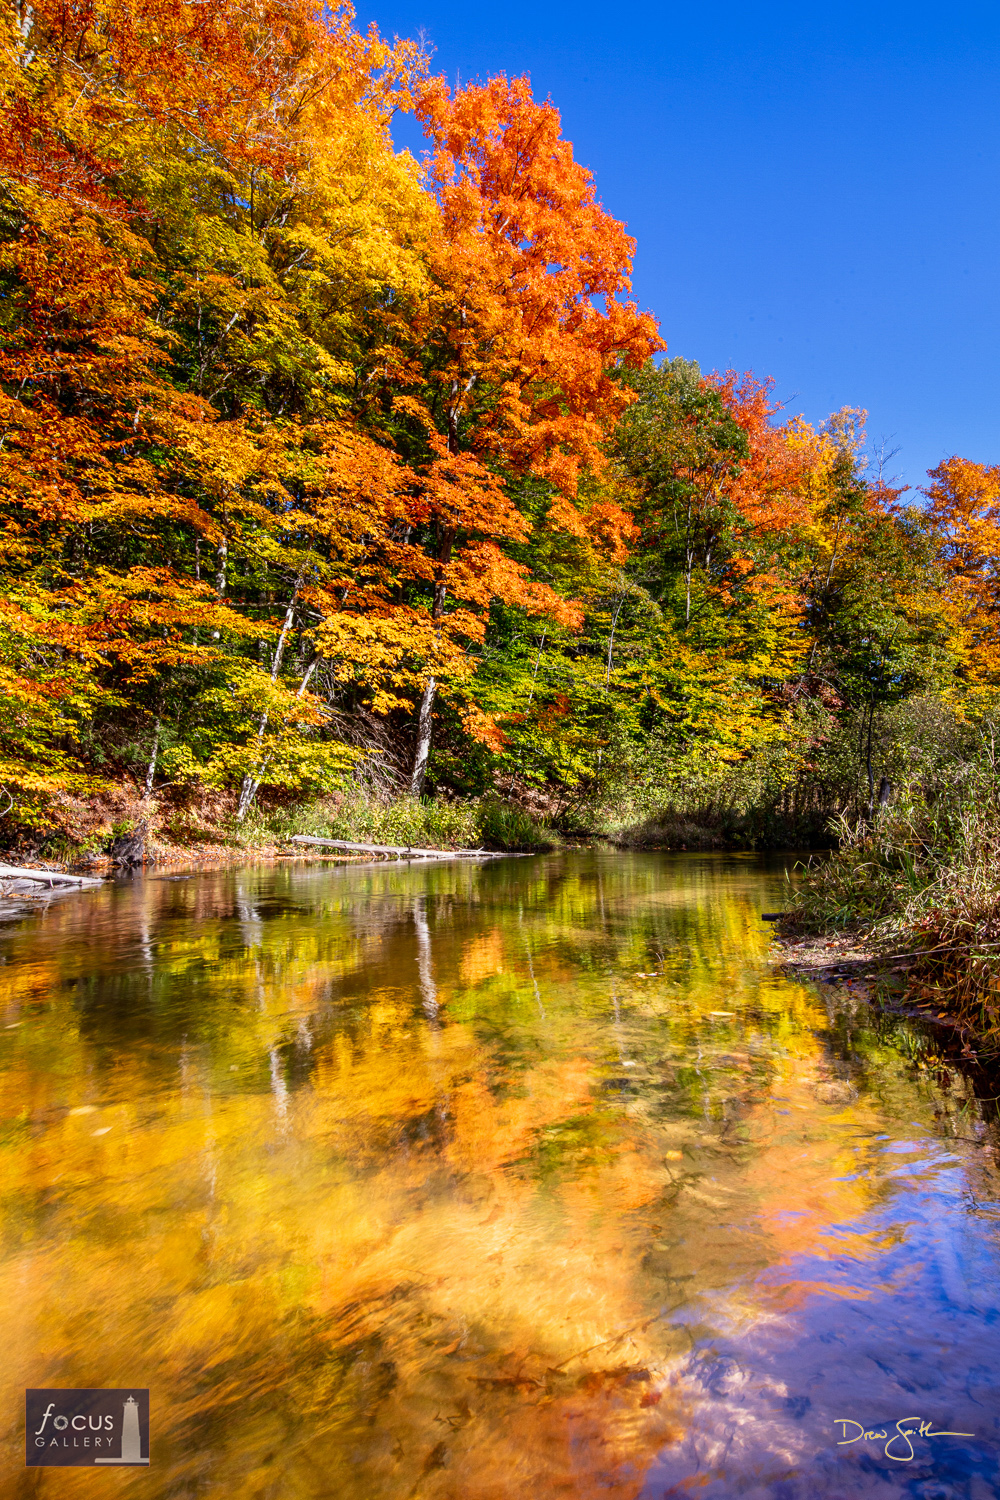 Photo © Drew Smith Peak fall foliage along the Betsie River on a beautiful blue-sky day.